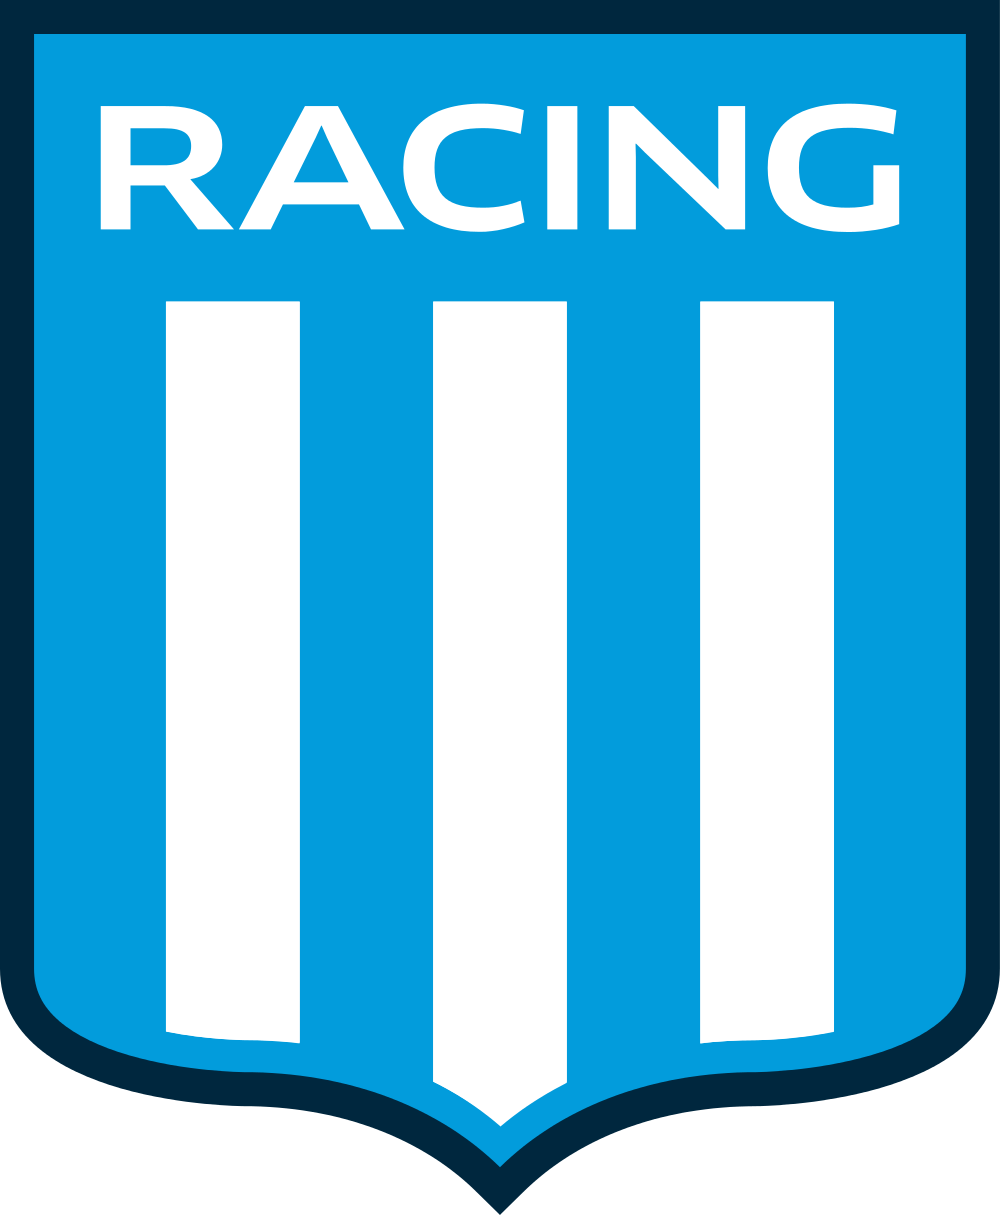 Racing Club - (R)